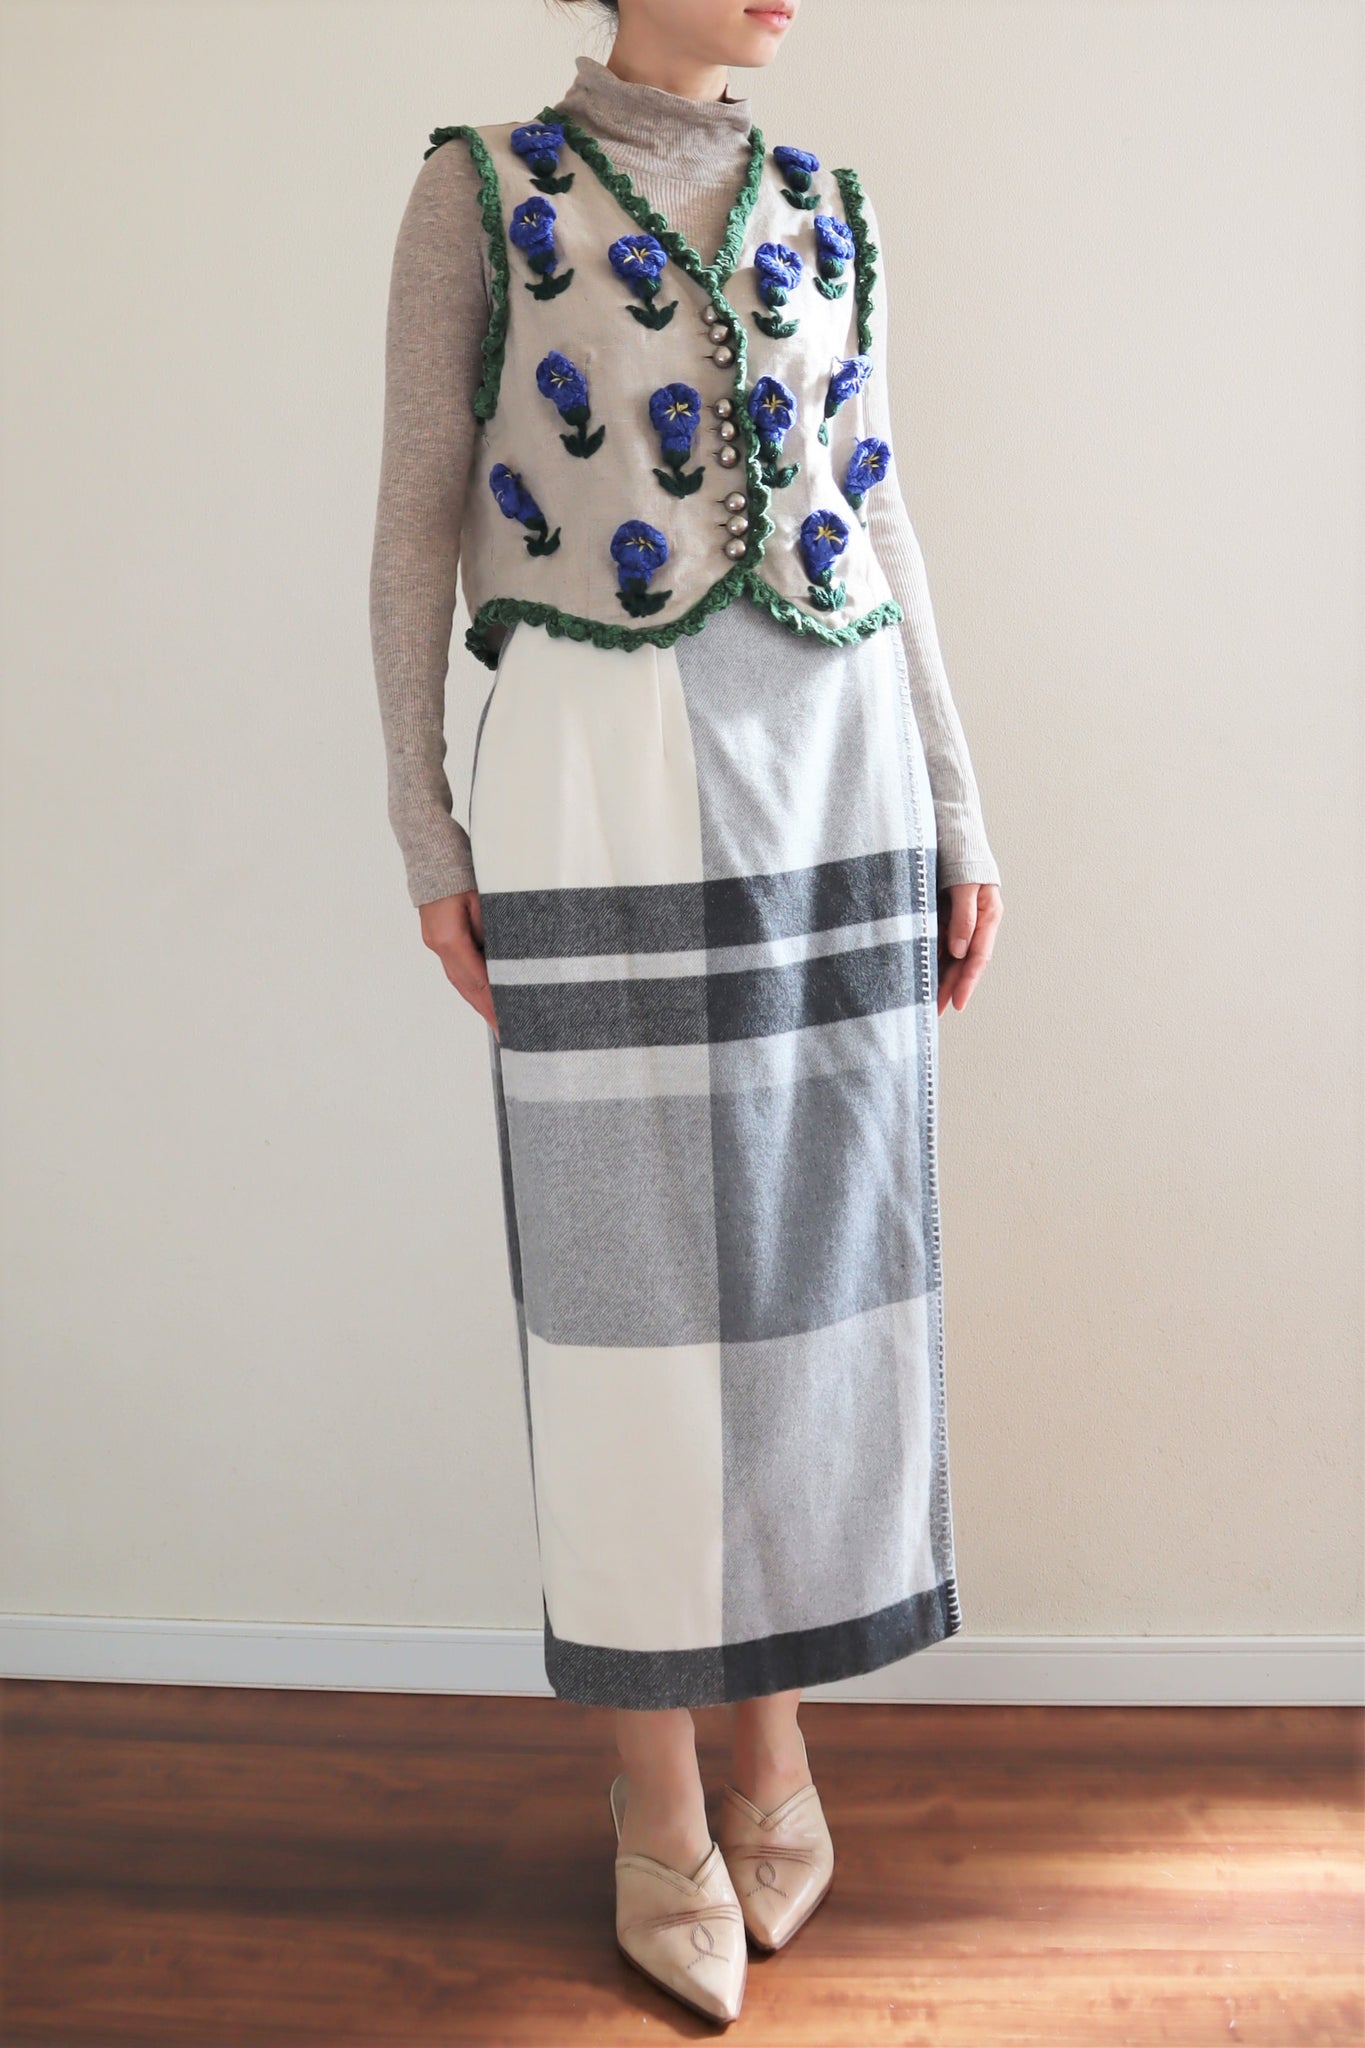 Vintage Plaid Wrap Skirt Gray